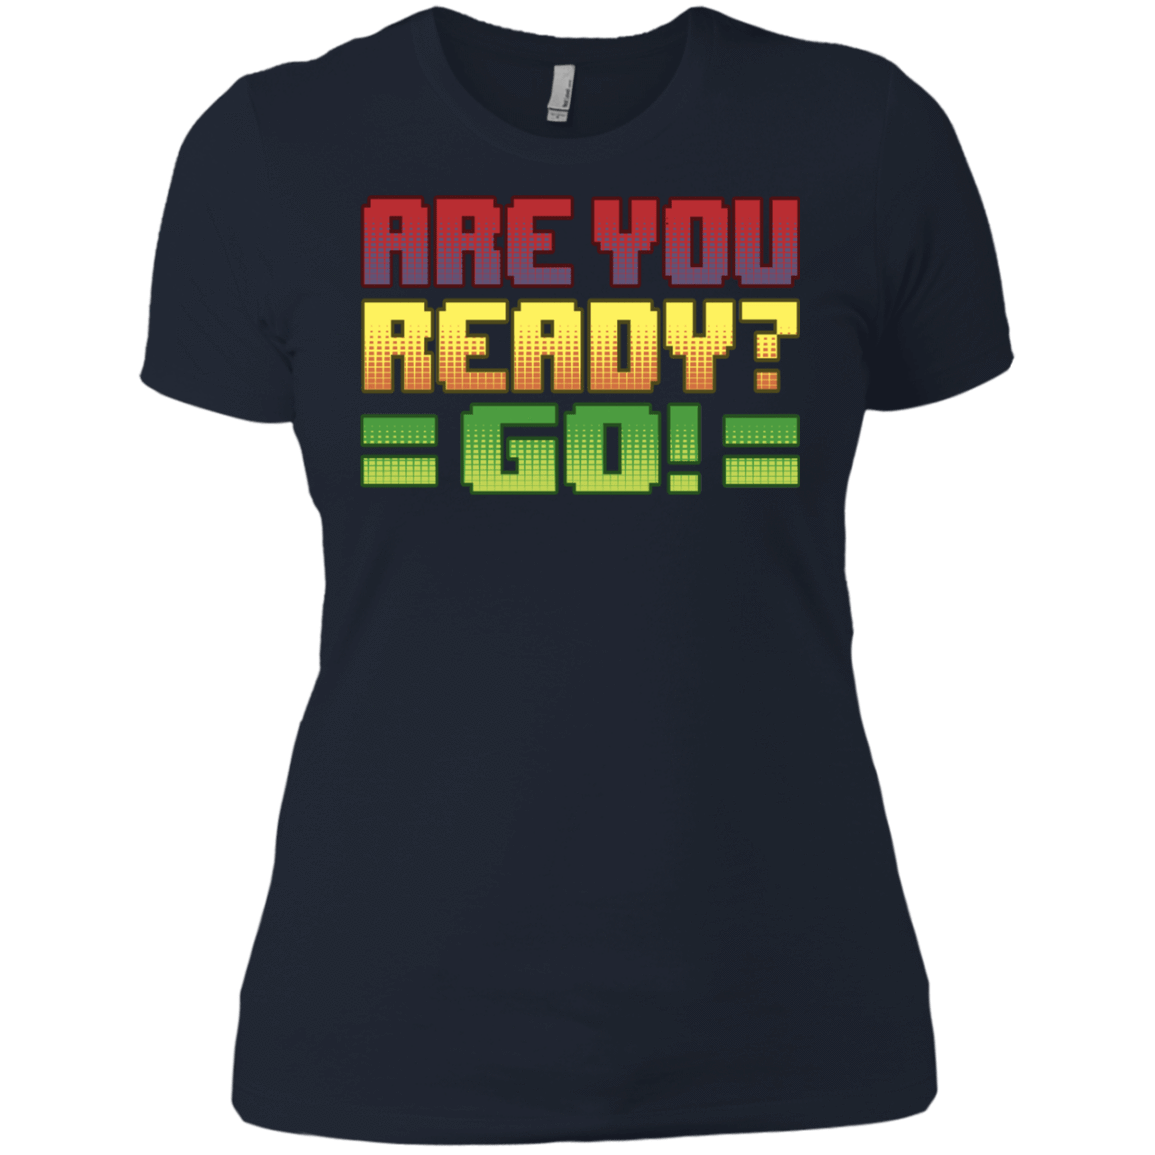 T-Shirts Midnight Navy / X-Small Ready Women's Premium T-Shirt